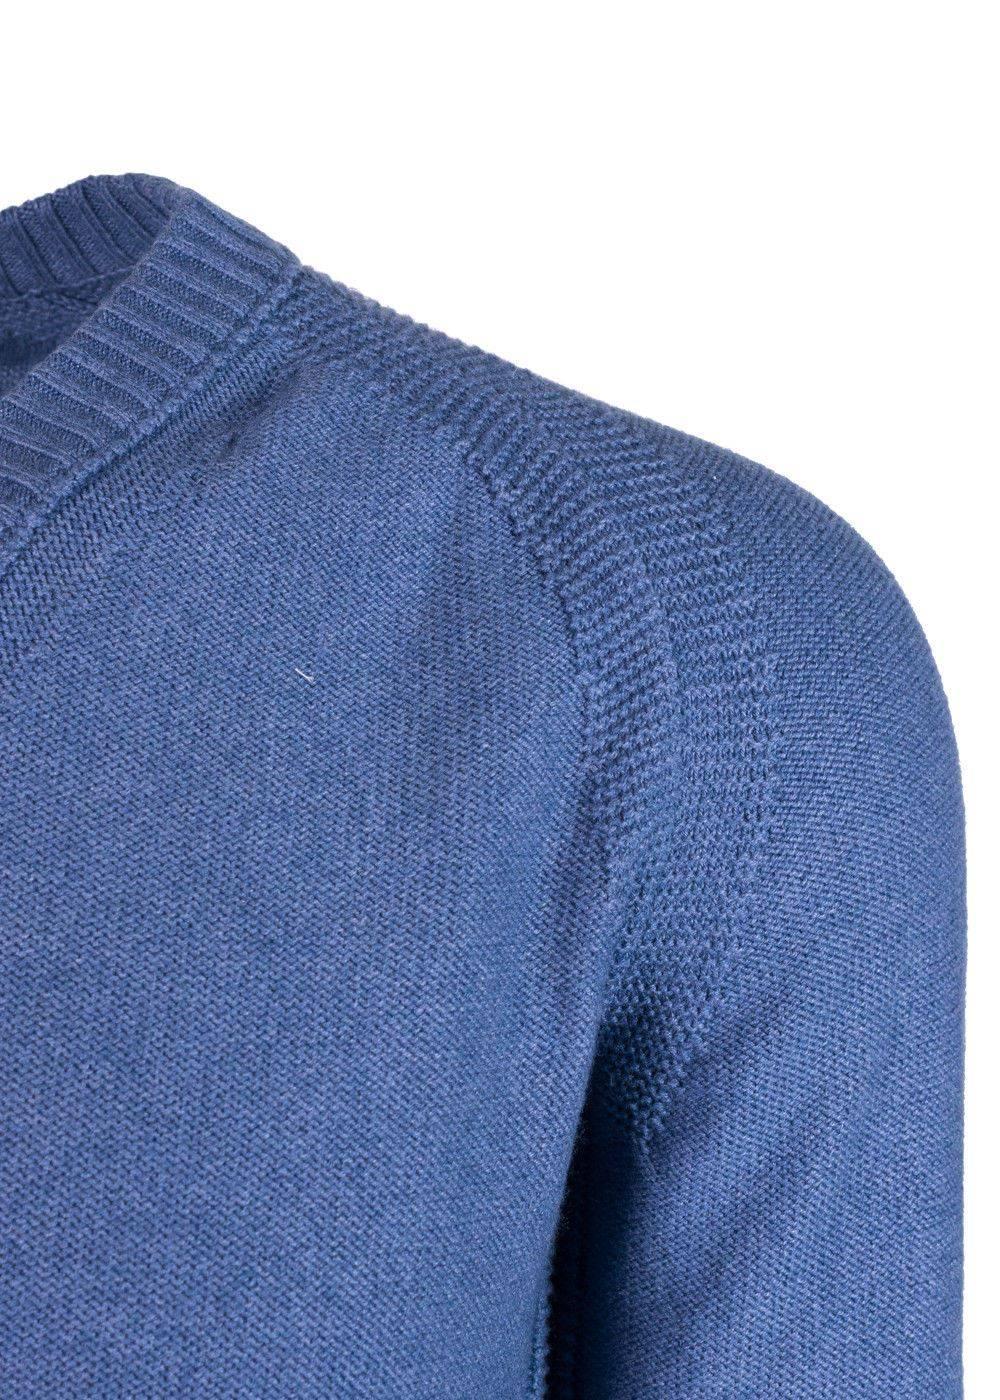 Blue Tom Ford Cotton Blend Knitted V Neck Raglan Sweater For Sale